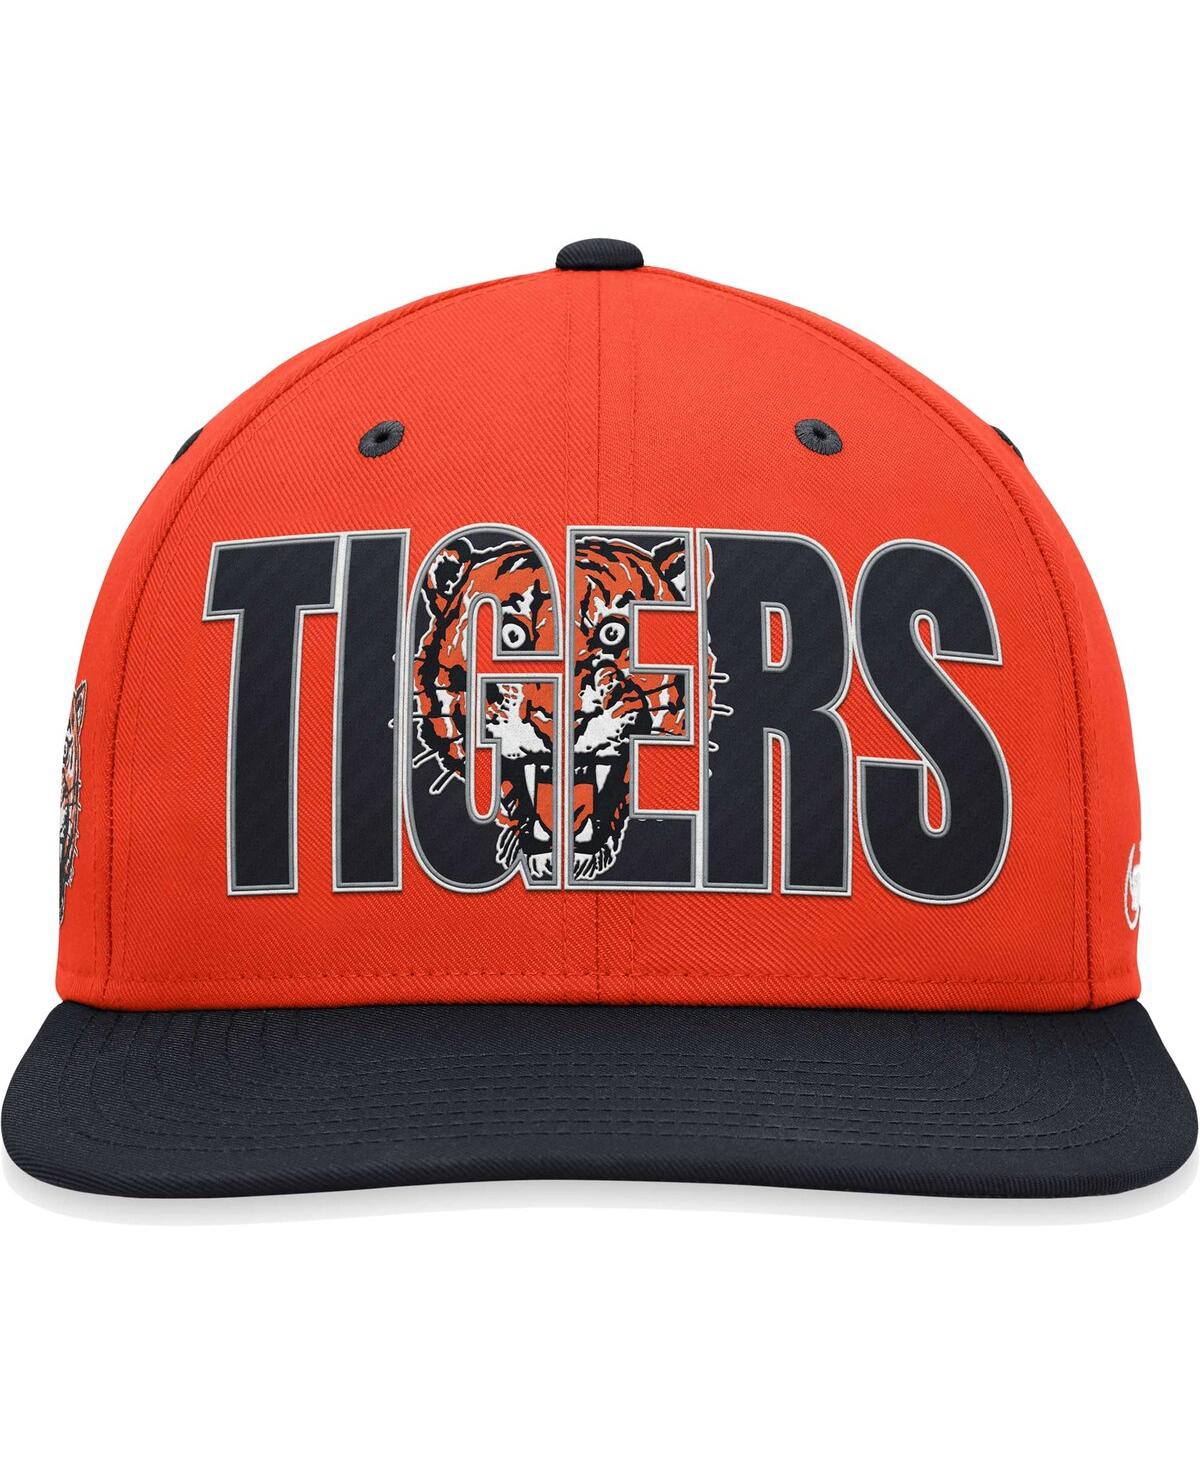 Shop Nike Men's  Orange Detroit Tigers Cooperstown Collection Pro Snapback Hat